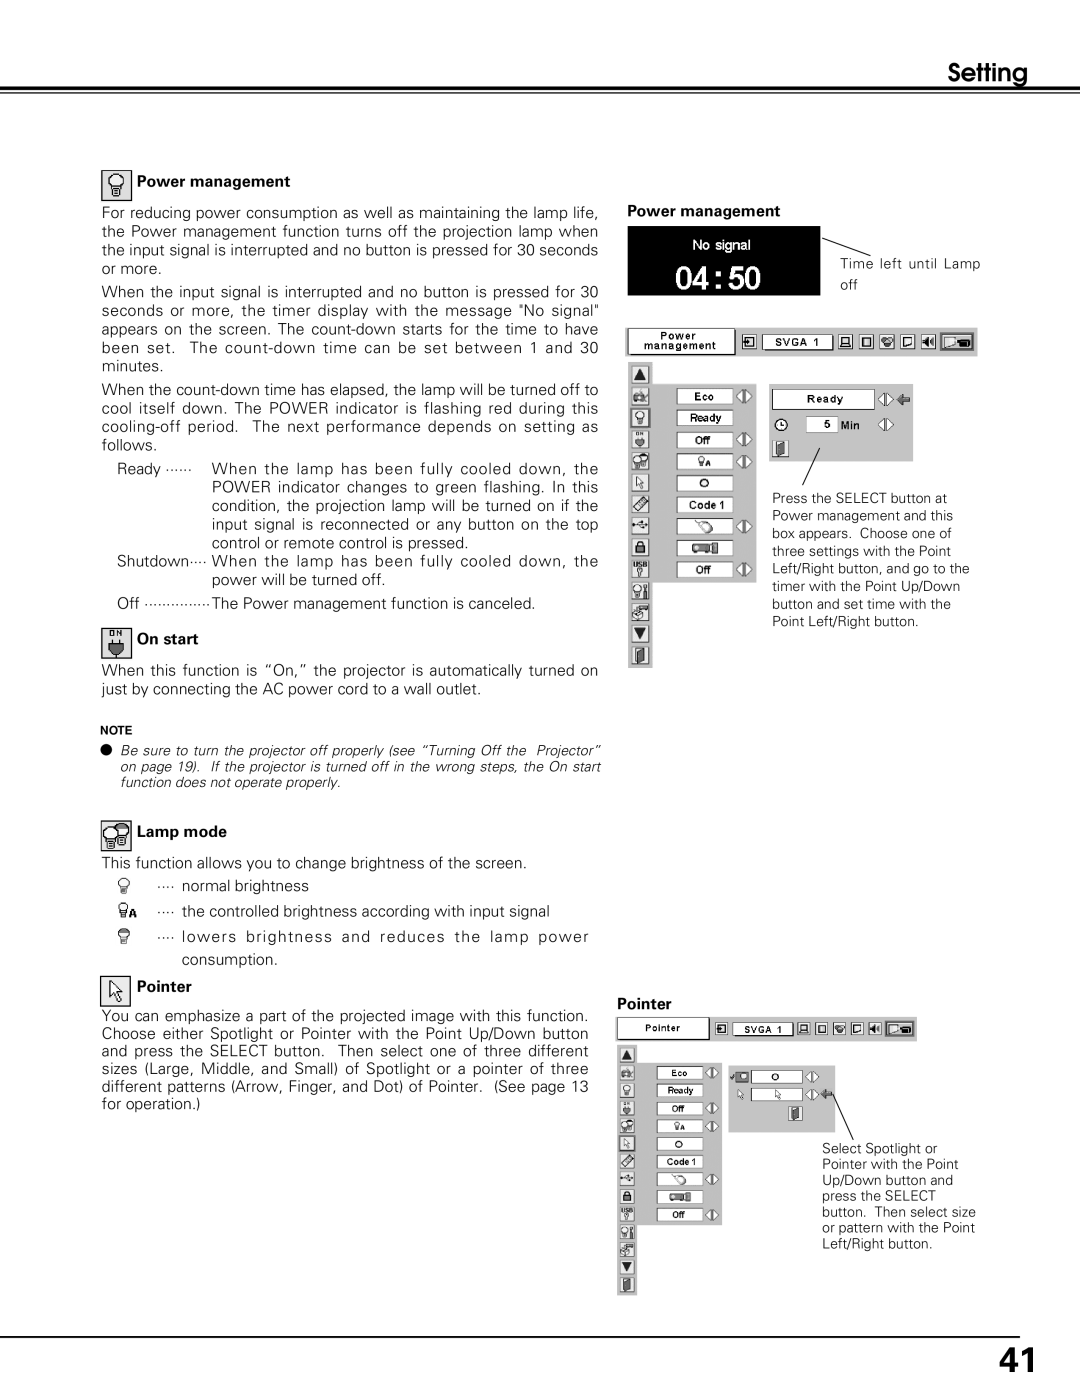 Eiki LC-XE10 instruction manual Setting, Power management, On start, Lamp mode, Pointer Pointer 